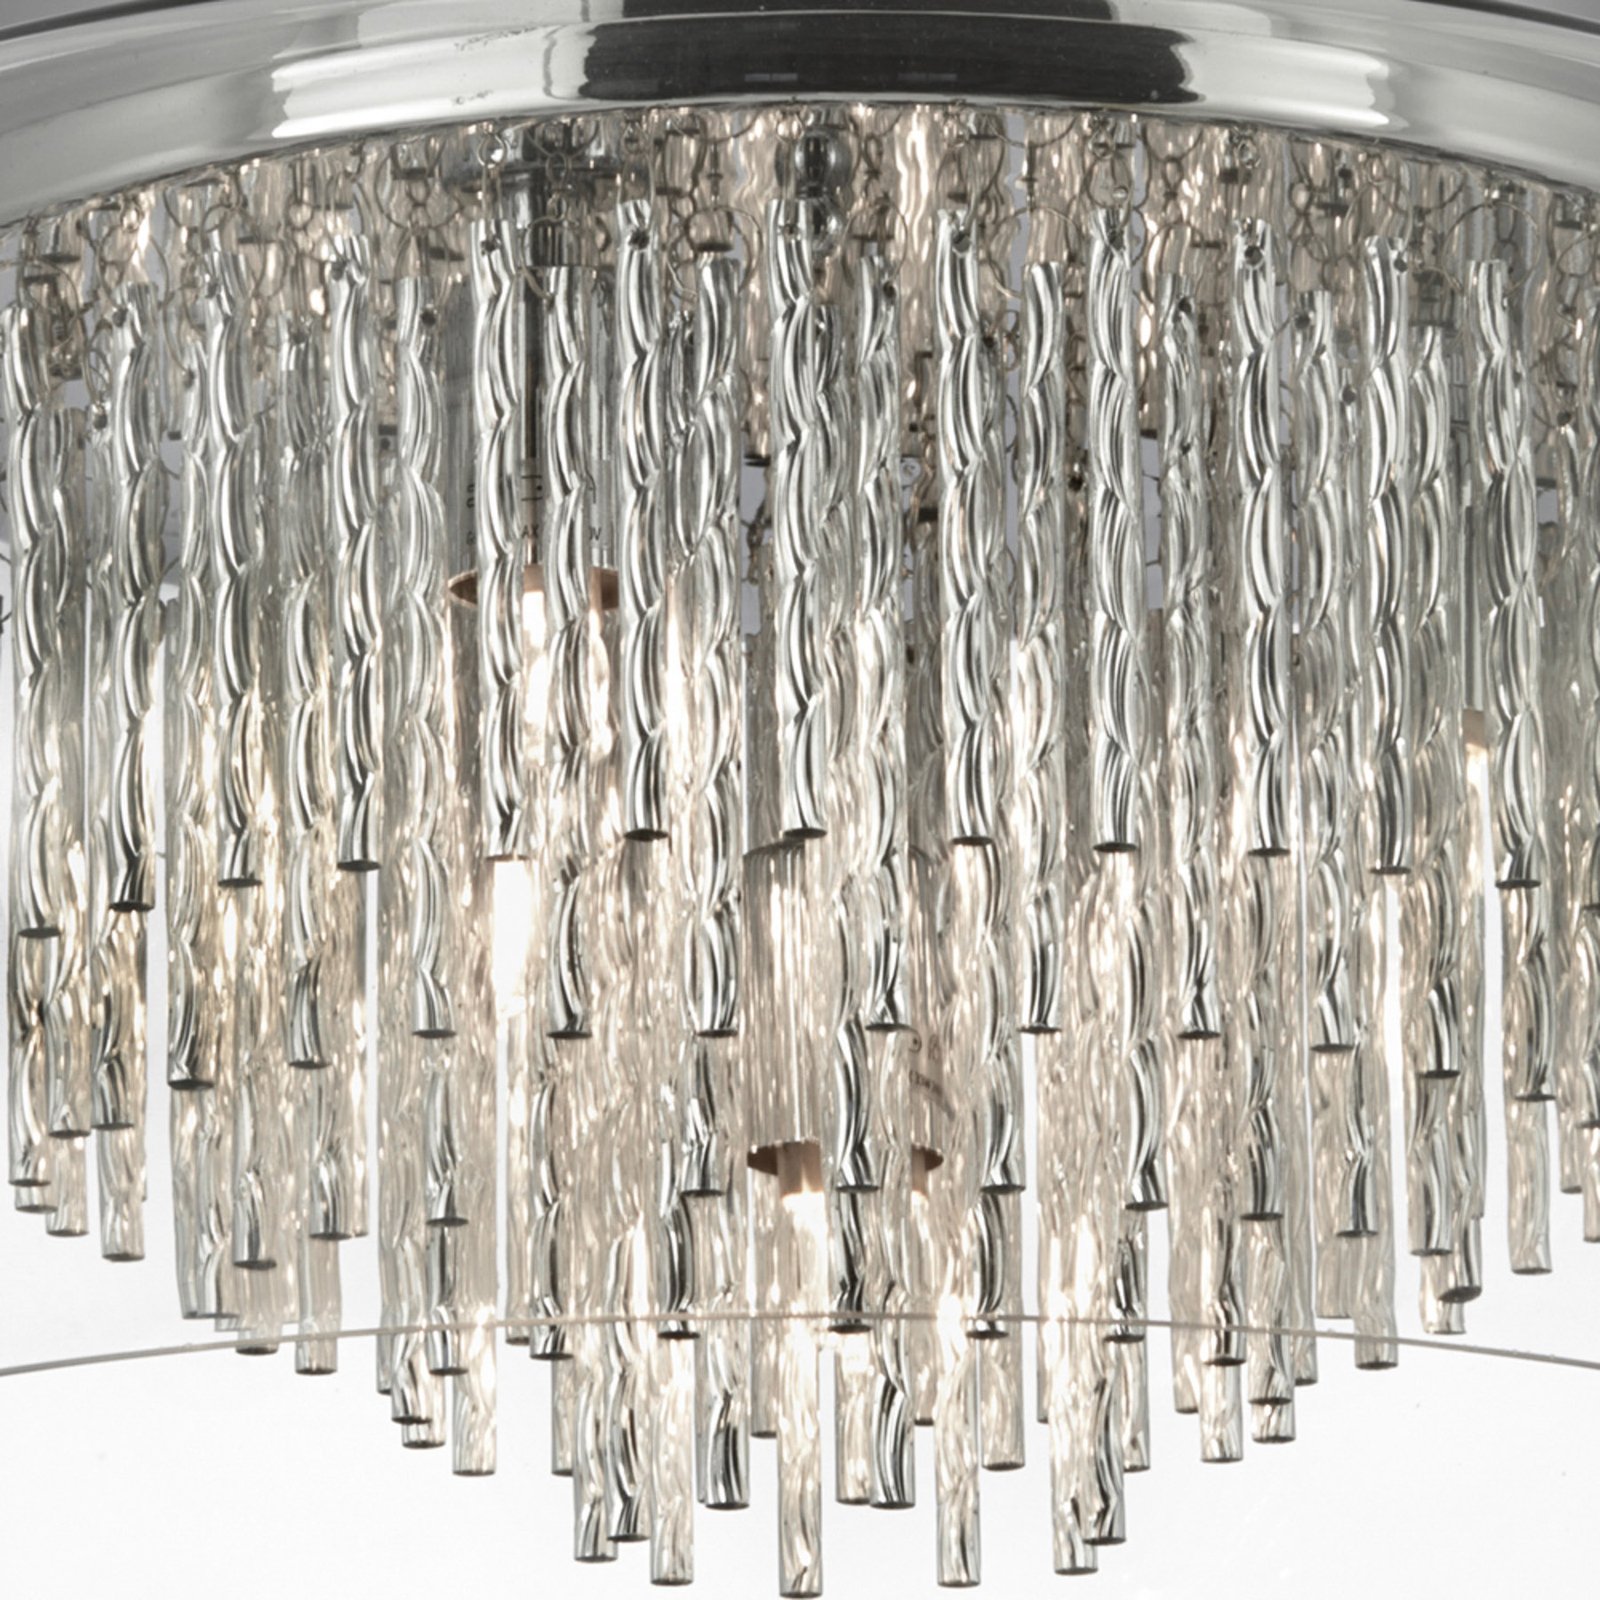 Lampa sufitowa 4624 z aluminiowymi spiralami